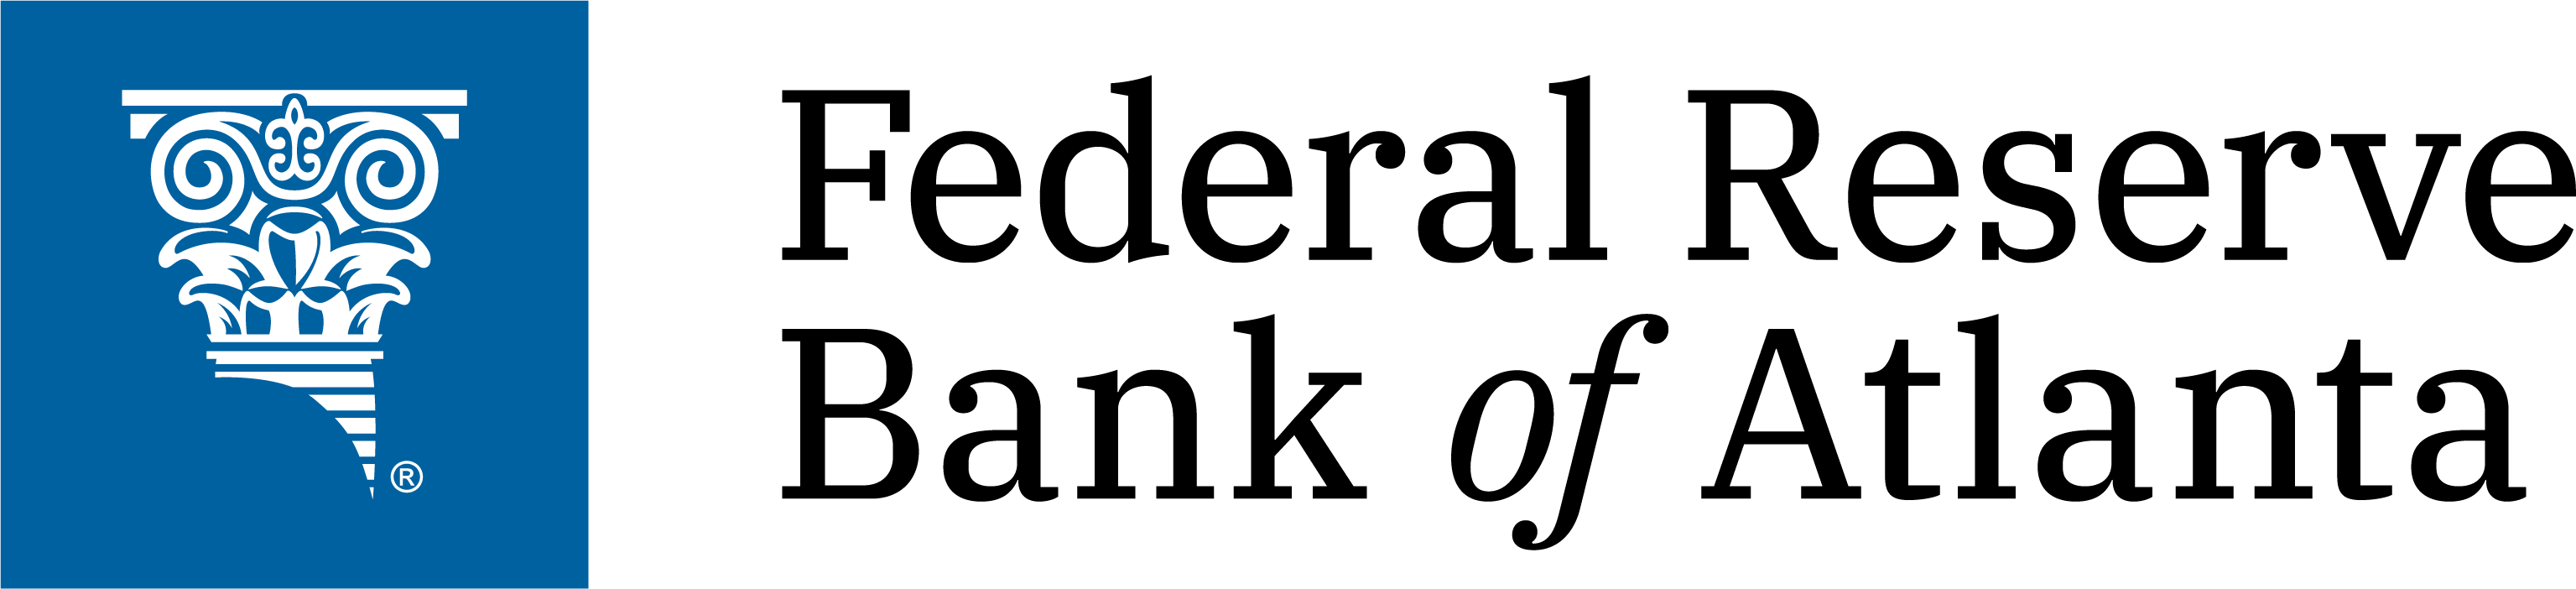 Federal Reserve Bank of Atlanta logo